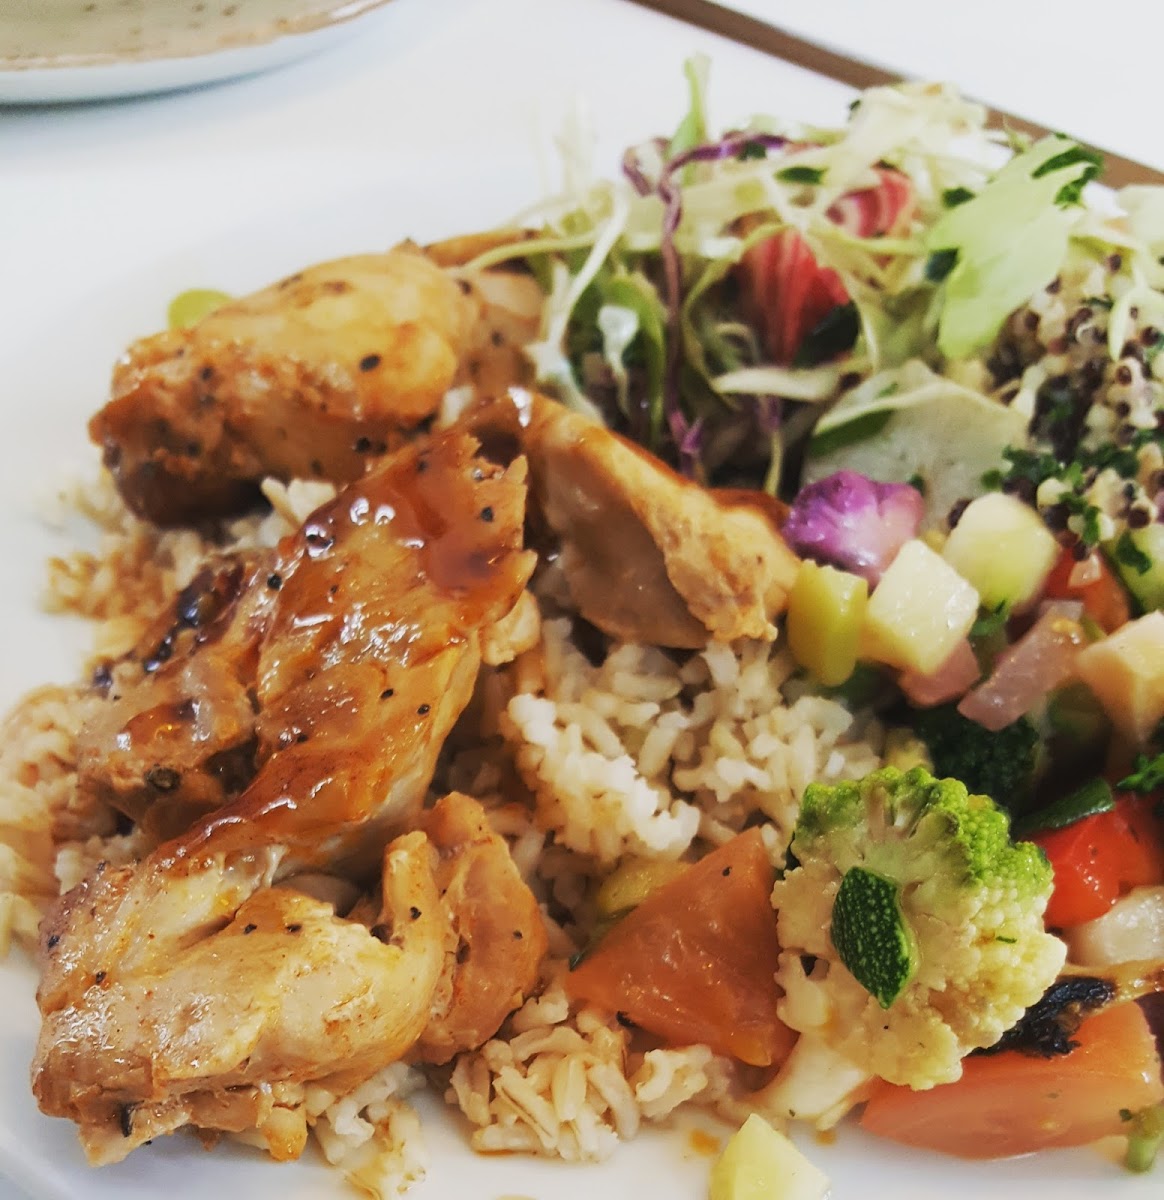 GF Teriyaki Chicken, quinoa, and side salad